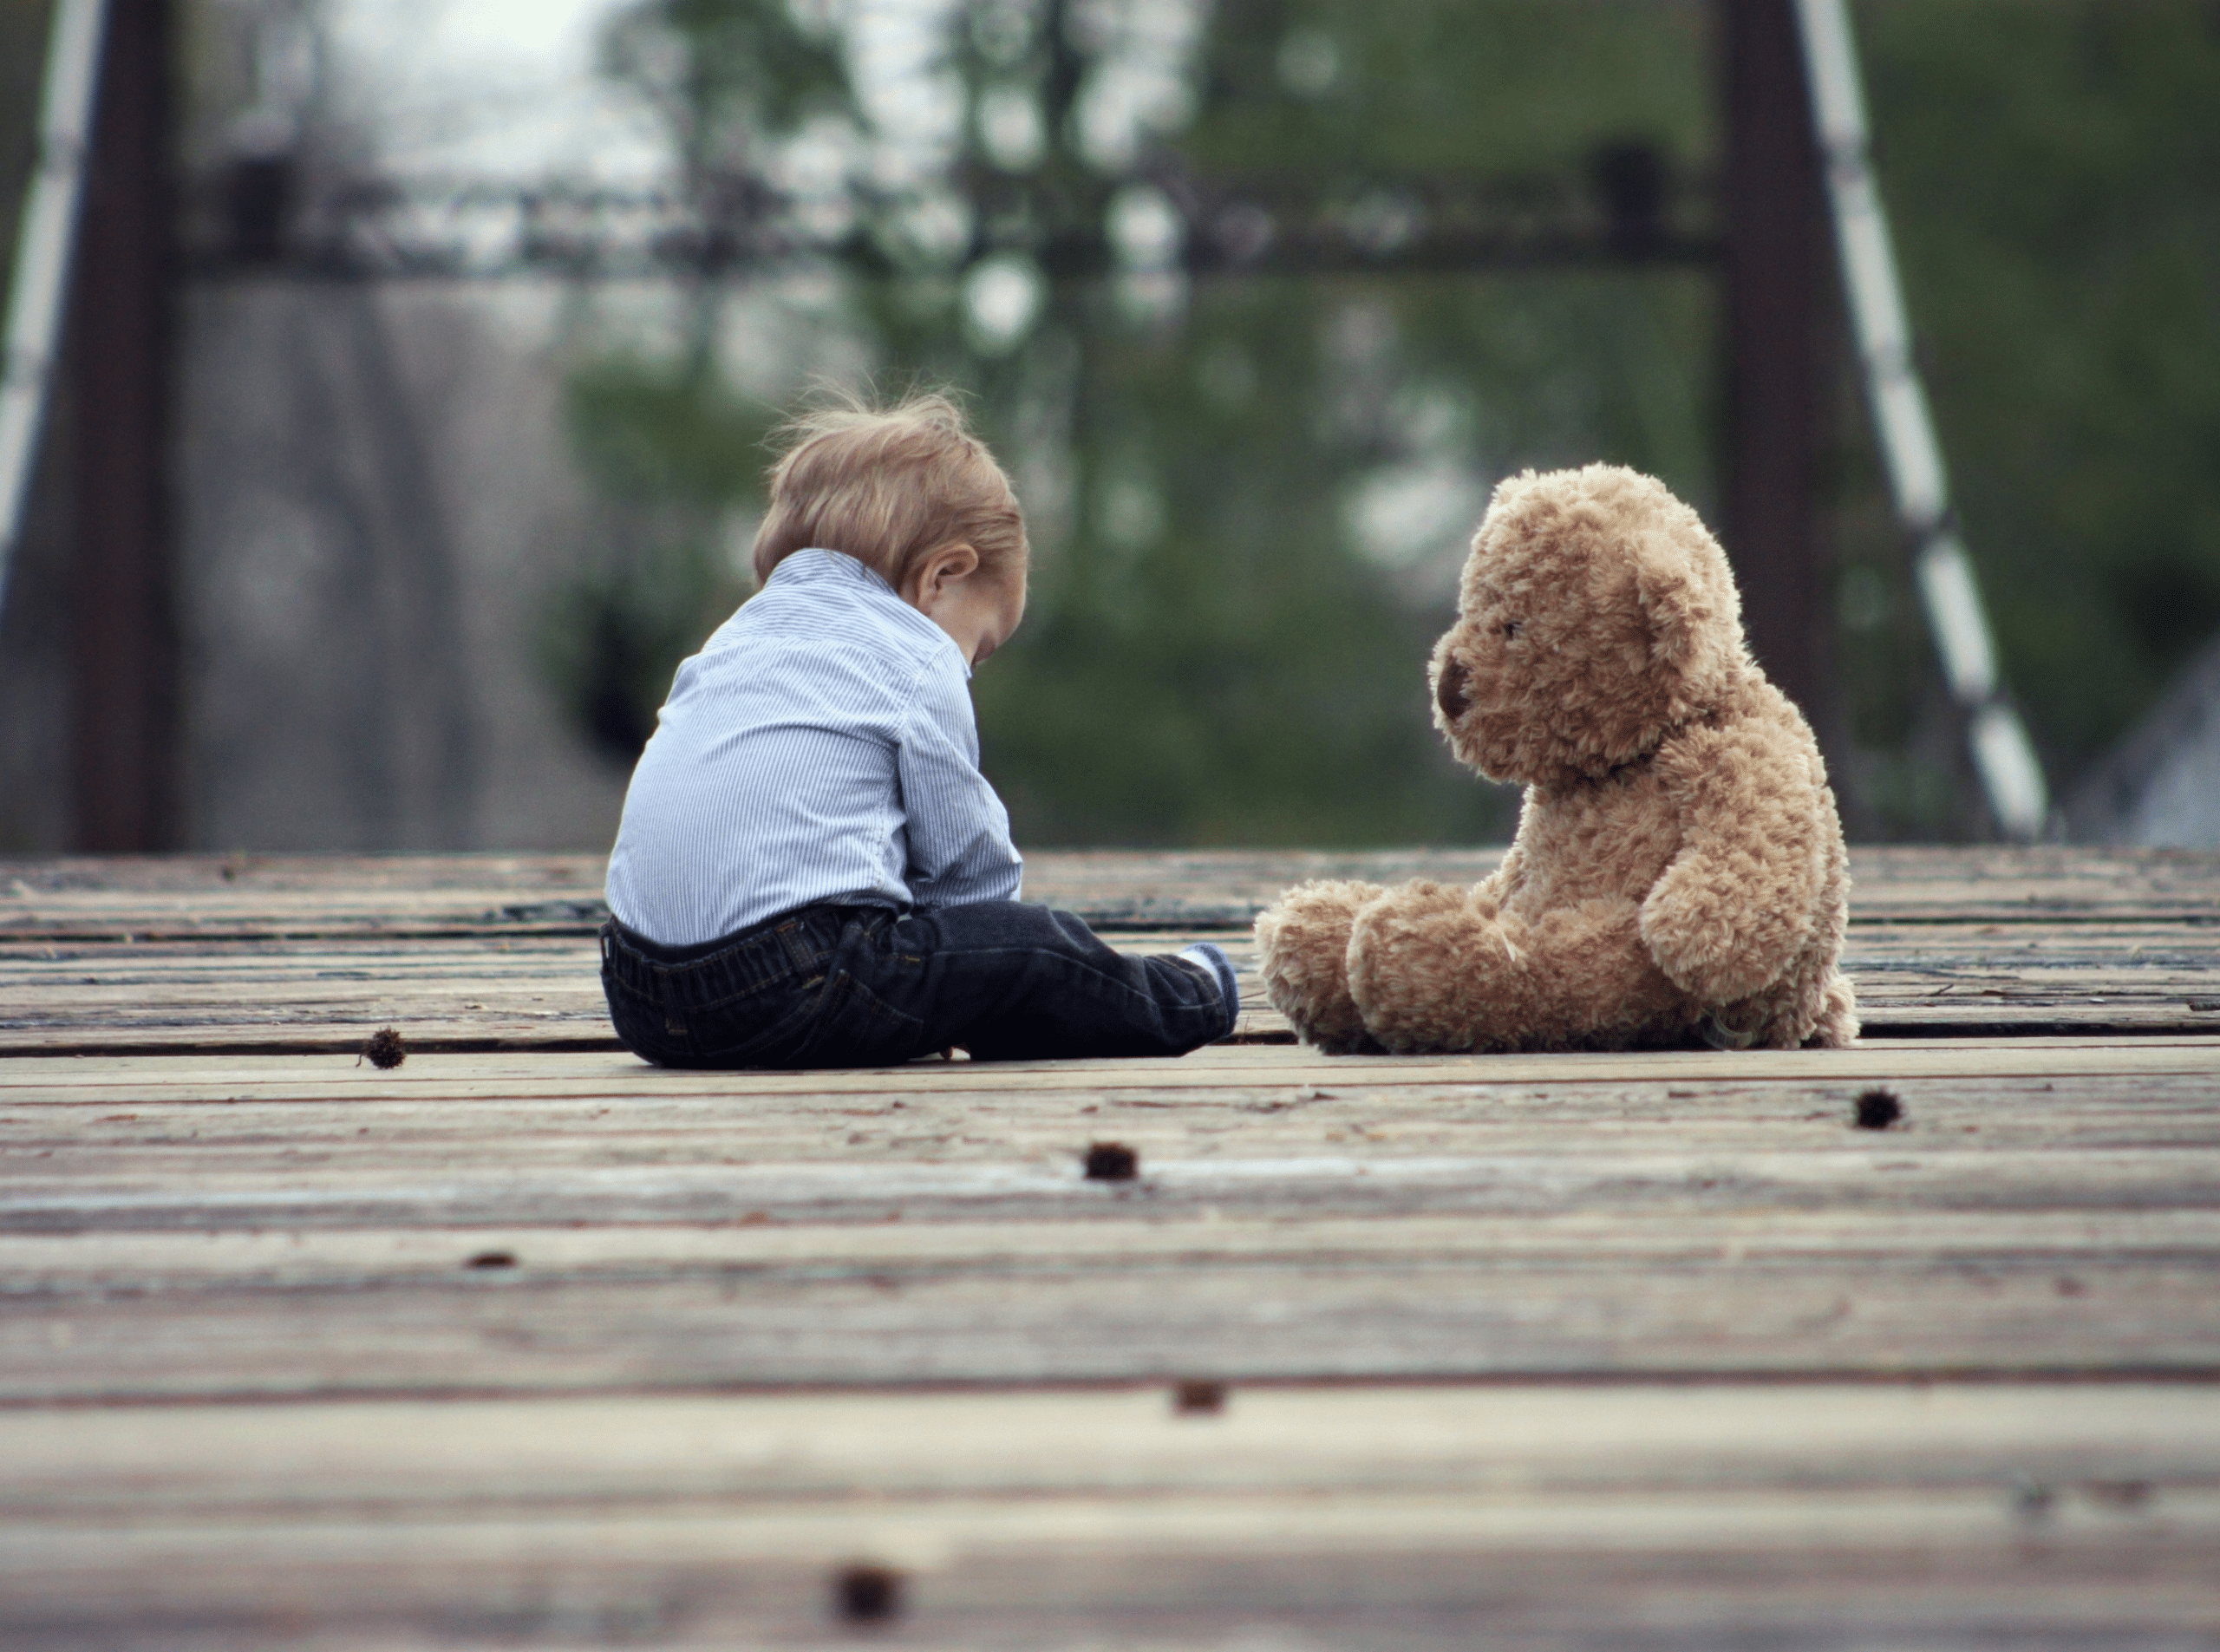 sad child, toddler with teddy bear, depressed toddler